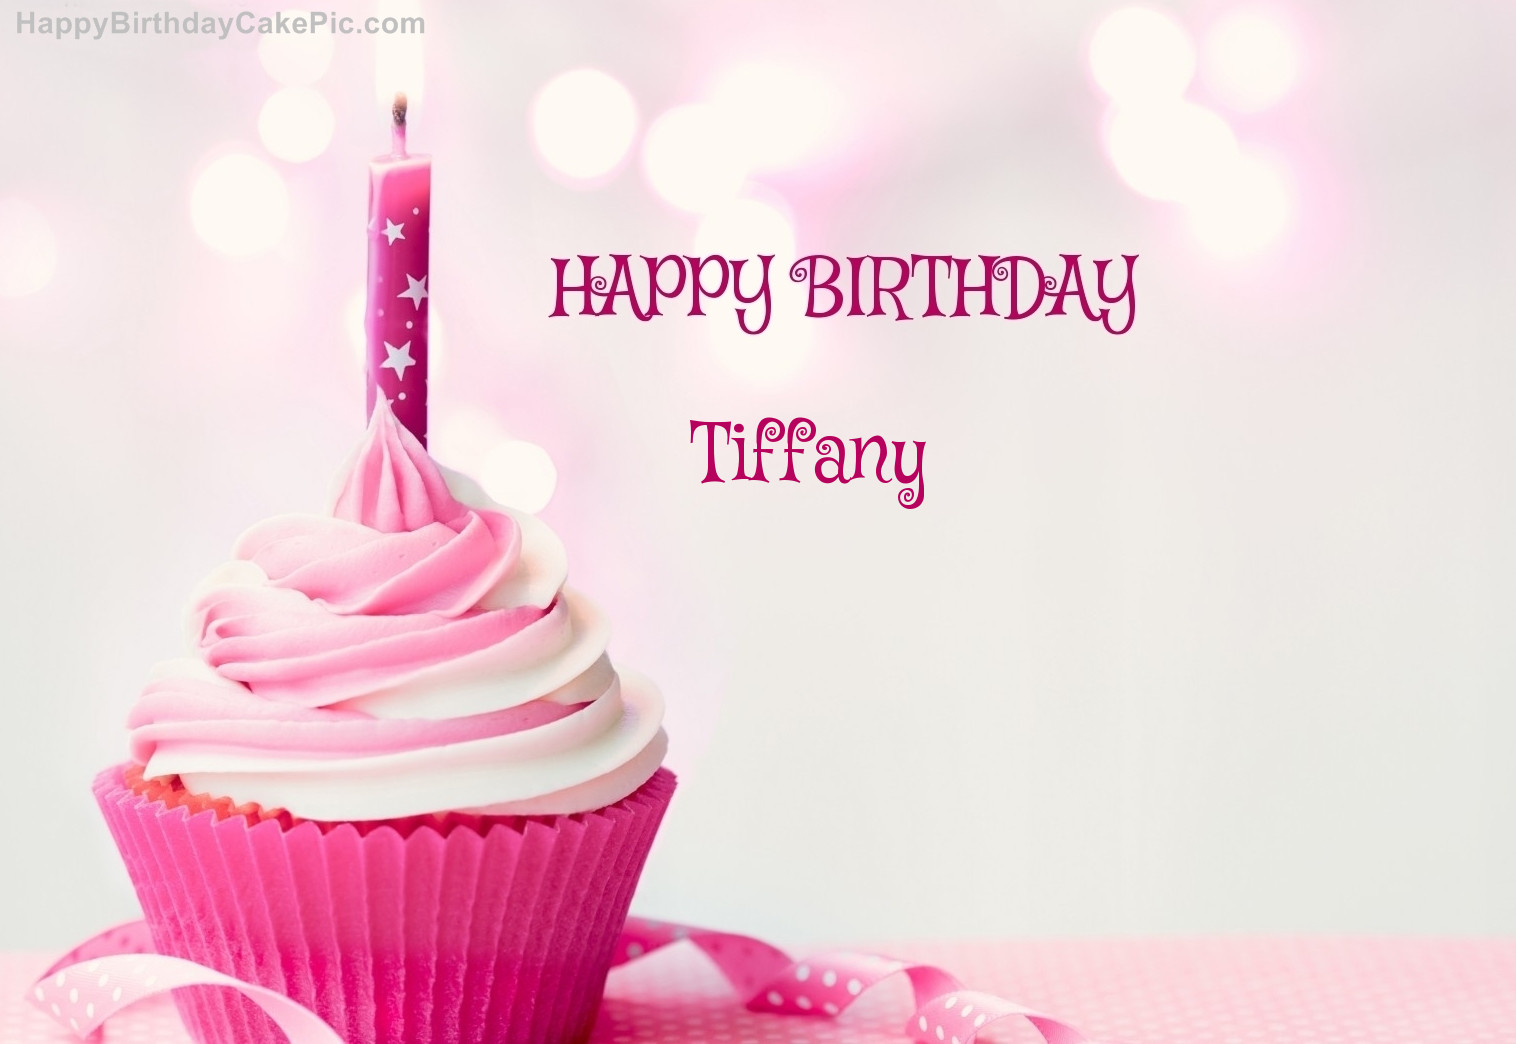 Happy Birthday Tiffany Cake
 Happy Birthday Cupcake Candle Pink Cake For Tiffany